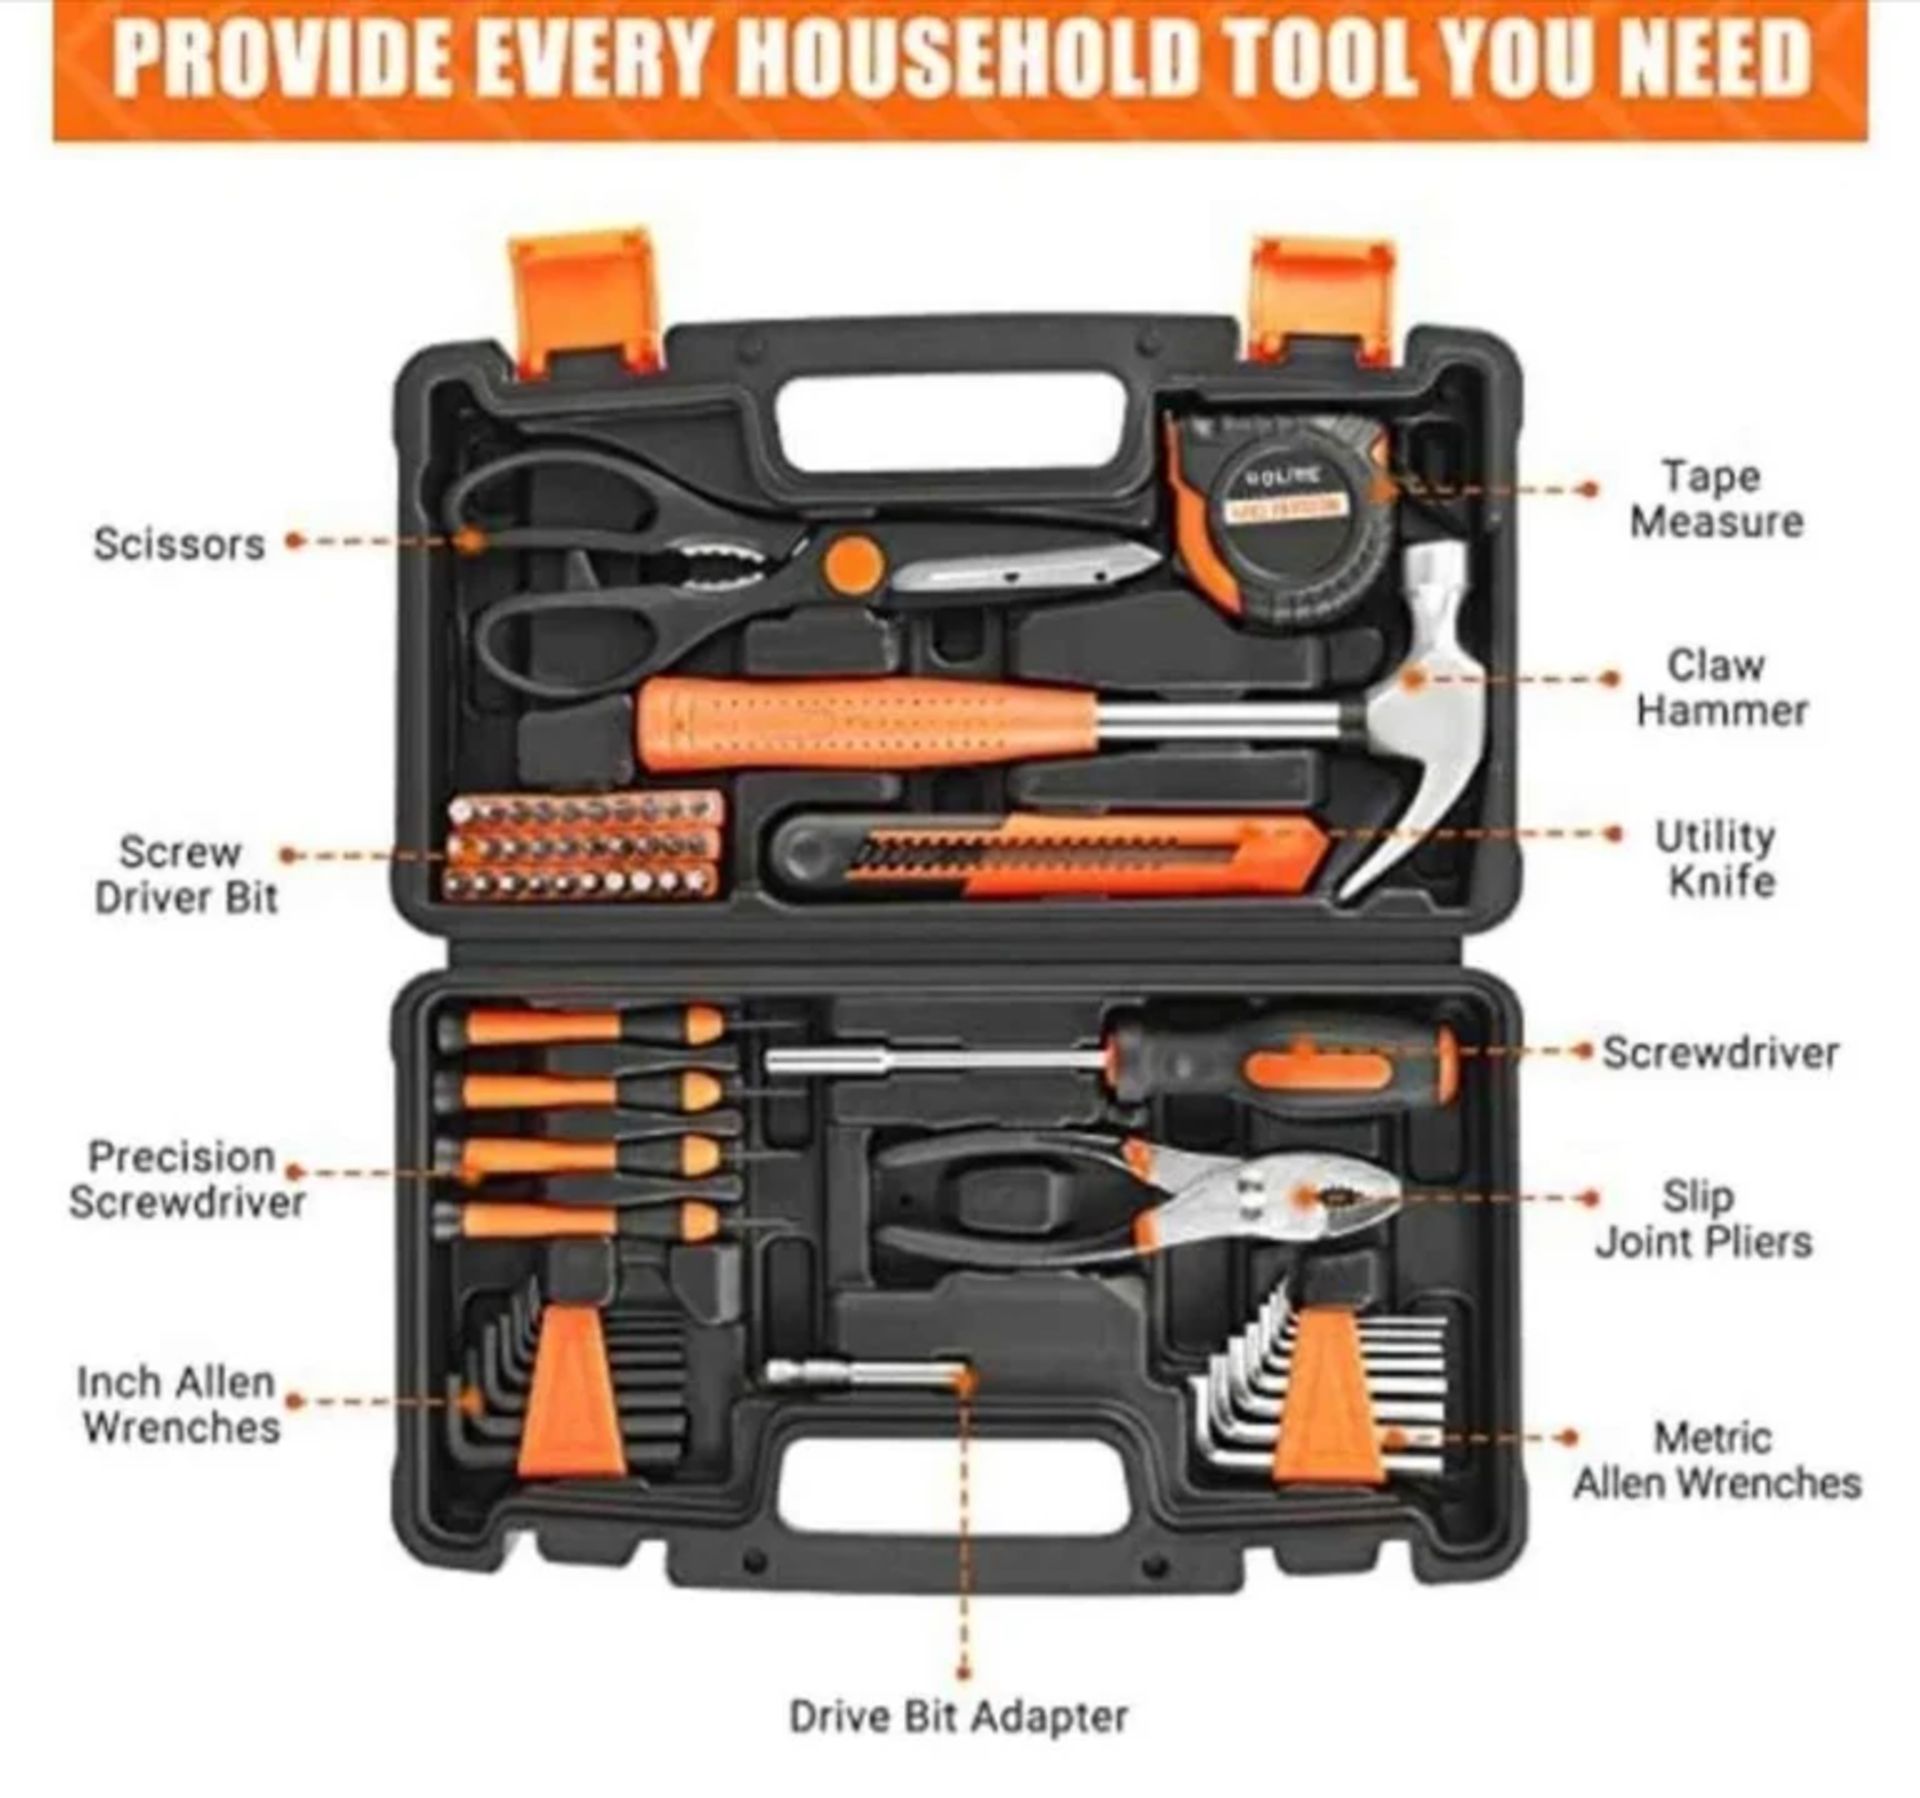 ENGiNDOT Home Tool Kit, 57-Piece Basic Tool kit with Storage Case. - Image 3 of 4